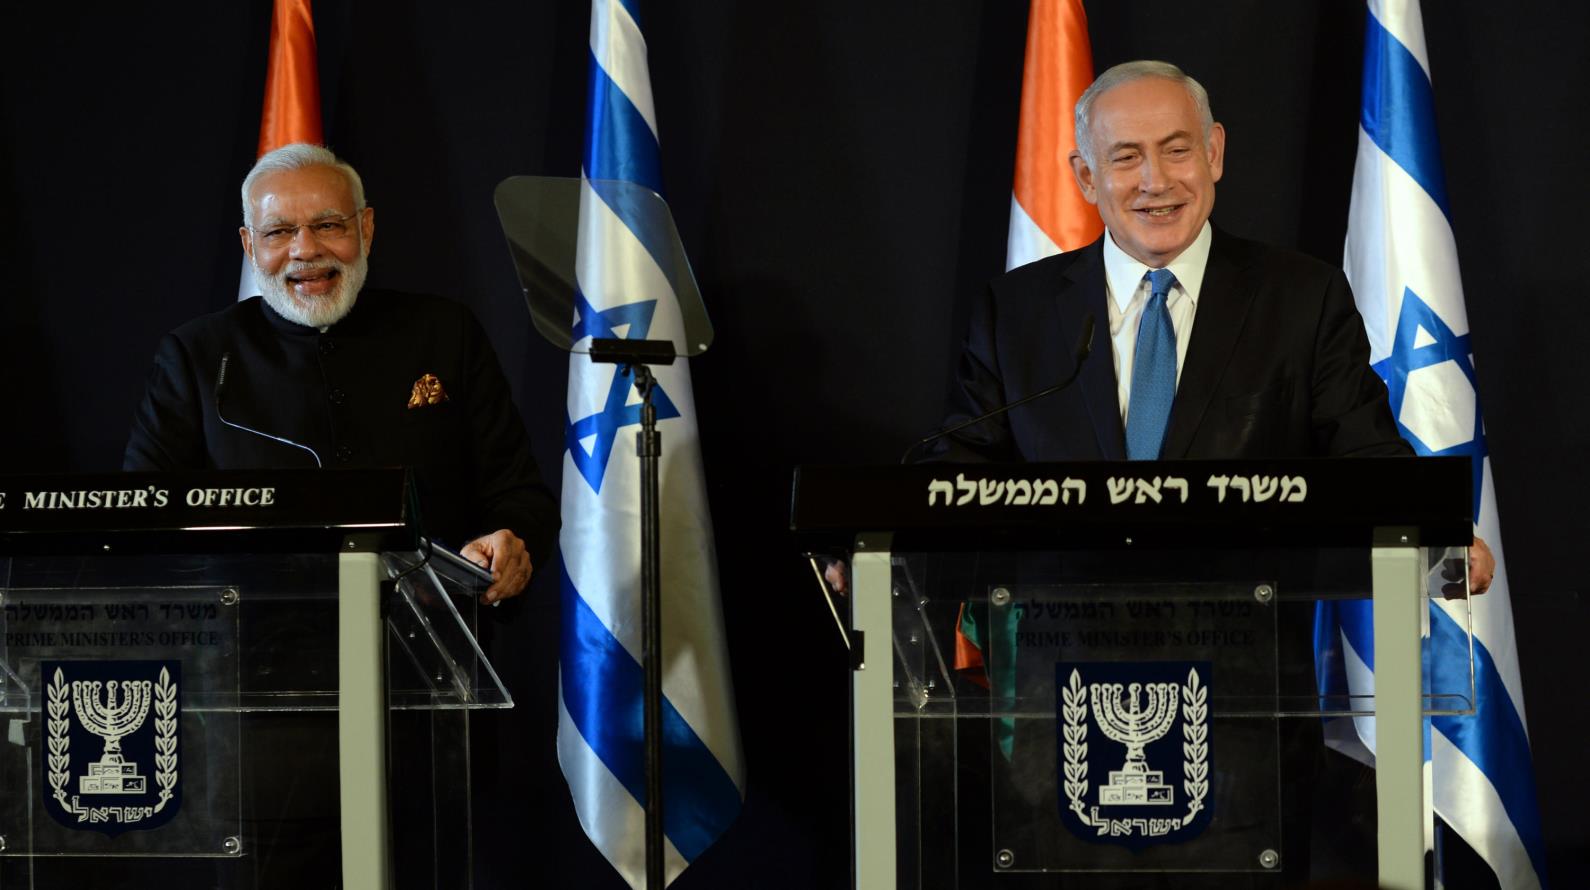 Indian Prime Minister Narendra Modi and Israeli Prime Minister Benjamin Netanyahu meet in Israel, July 2017. Photo by Haim Zach/GPO